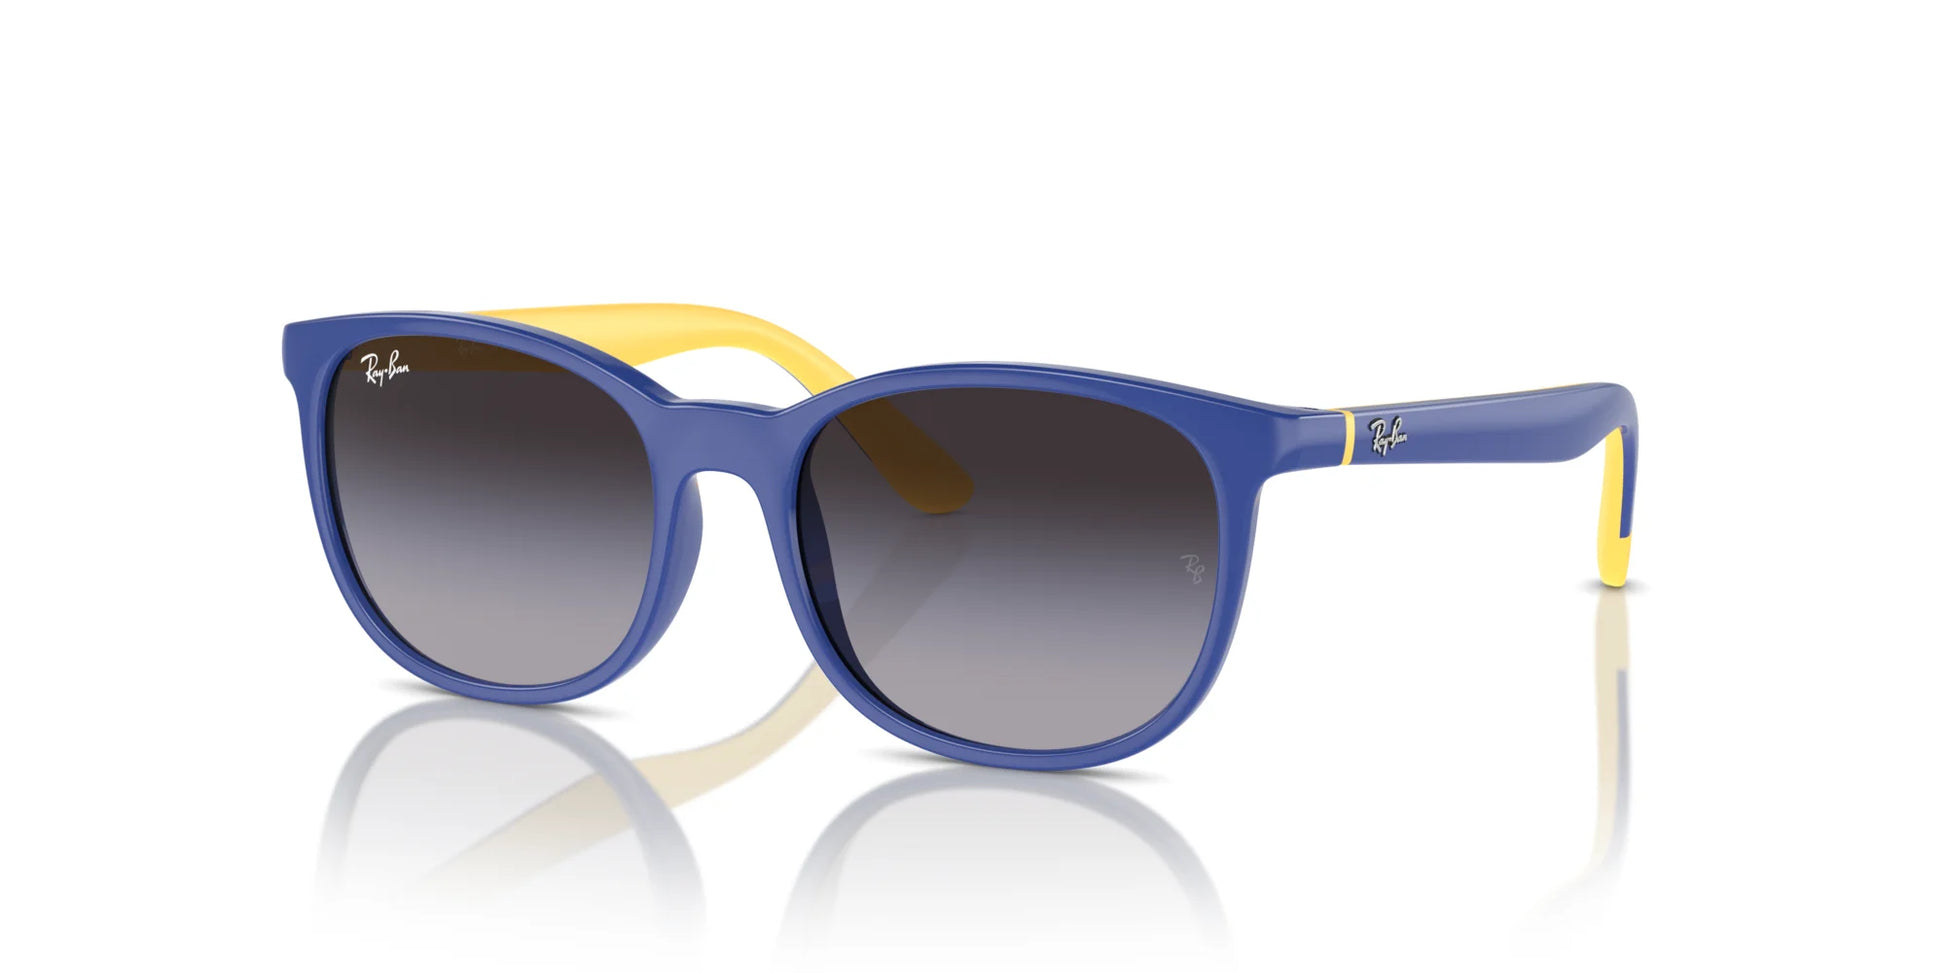 Ray-Ban RJ9079S Sunglasses Light Blue On Yellow / Violet